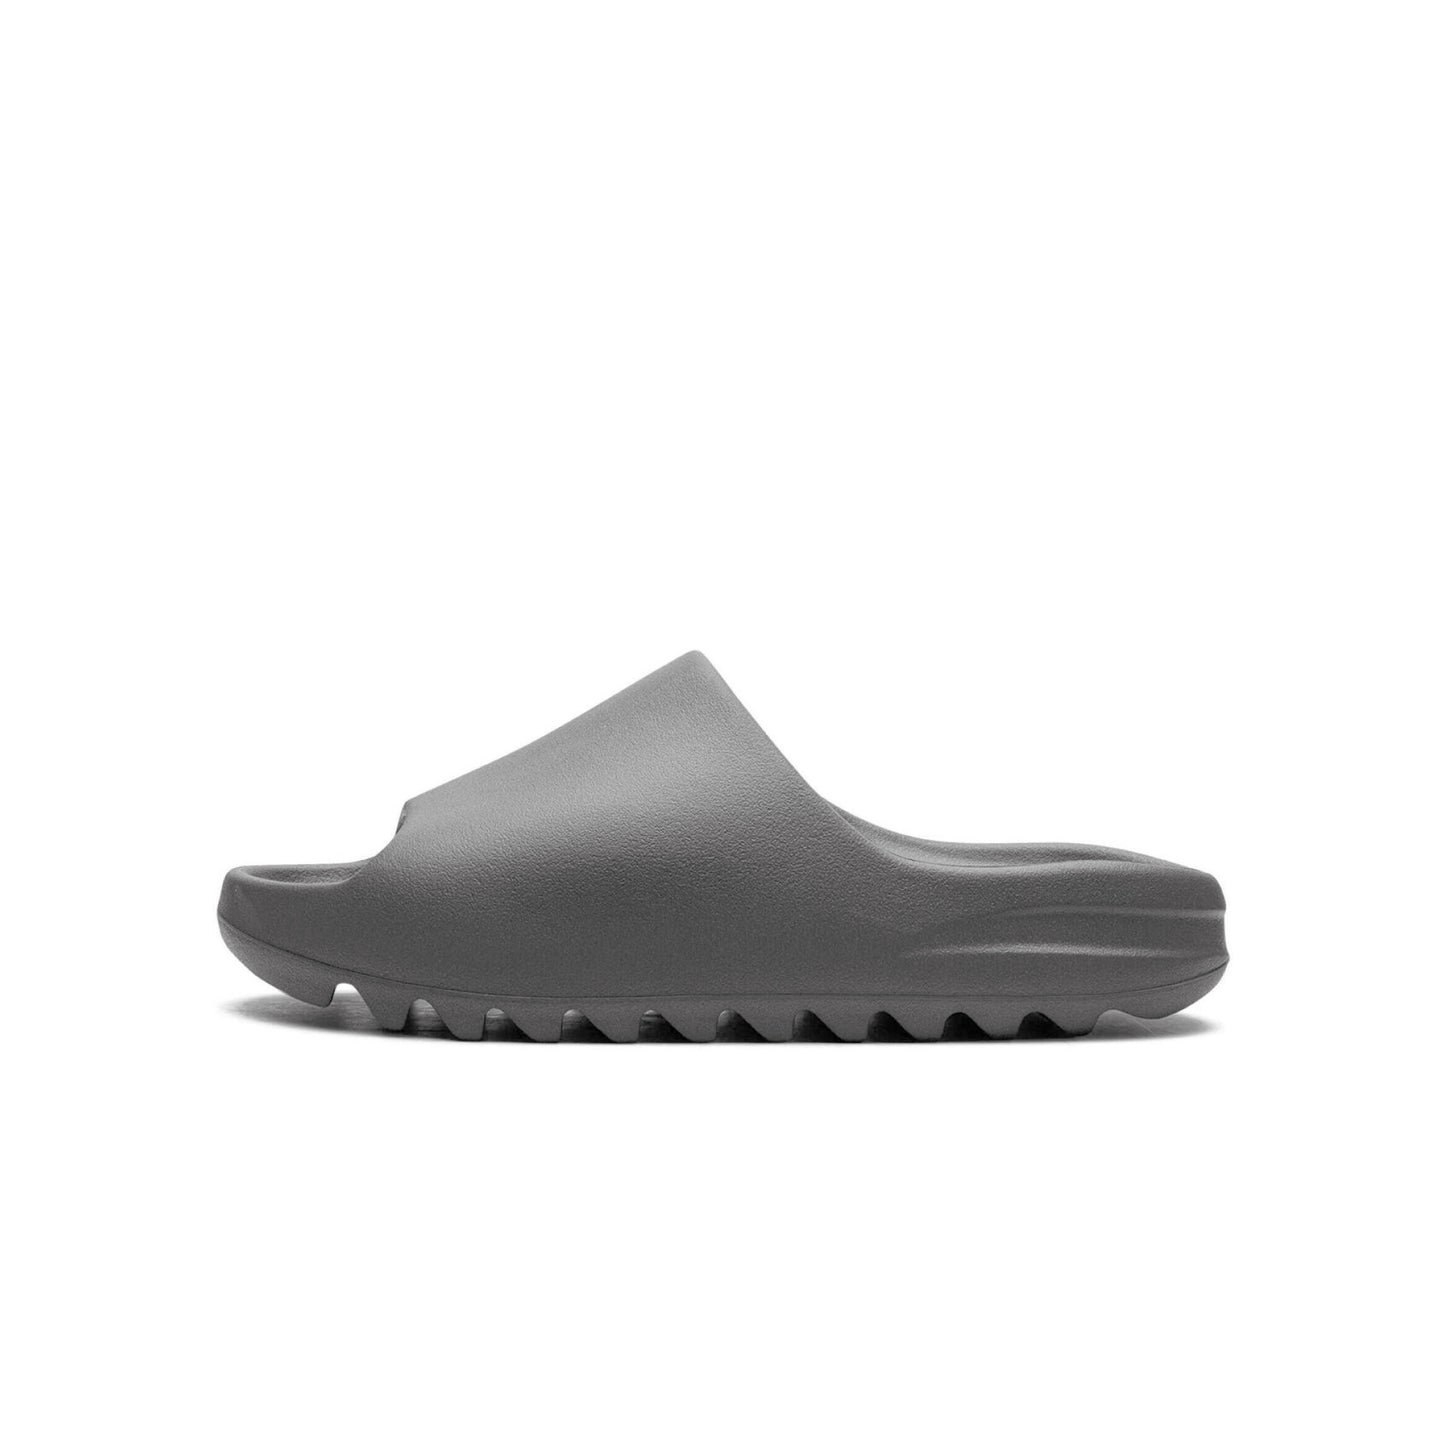 Adidas Yeezy Slide Granite - 48h